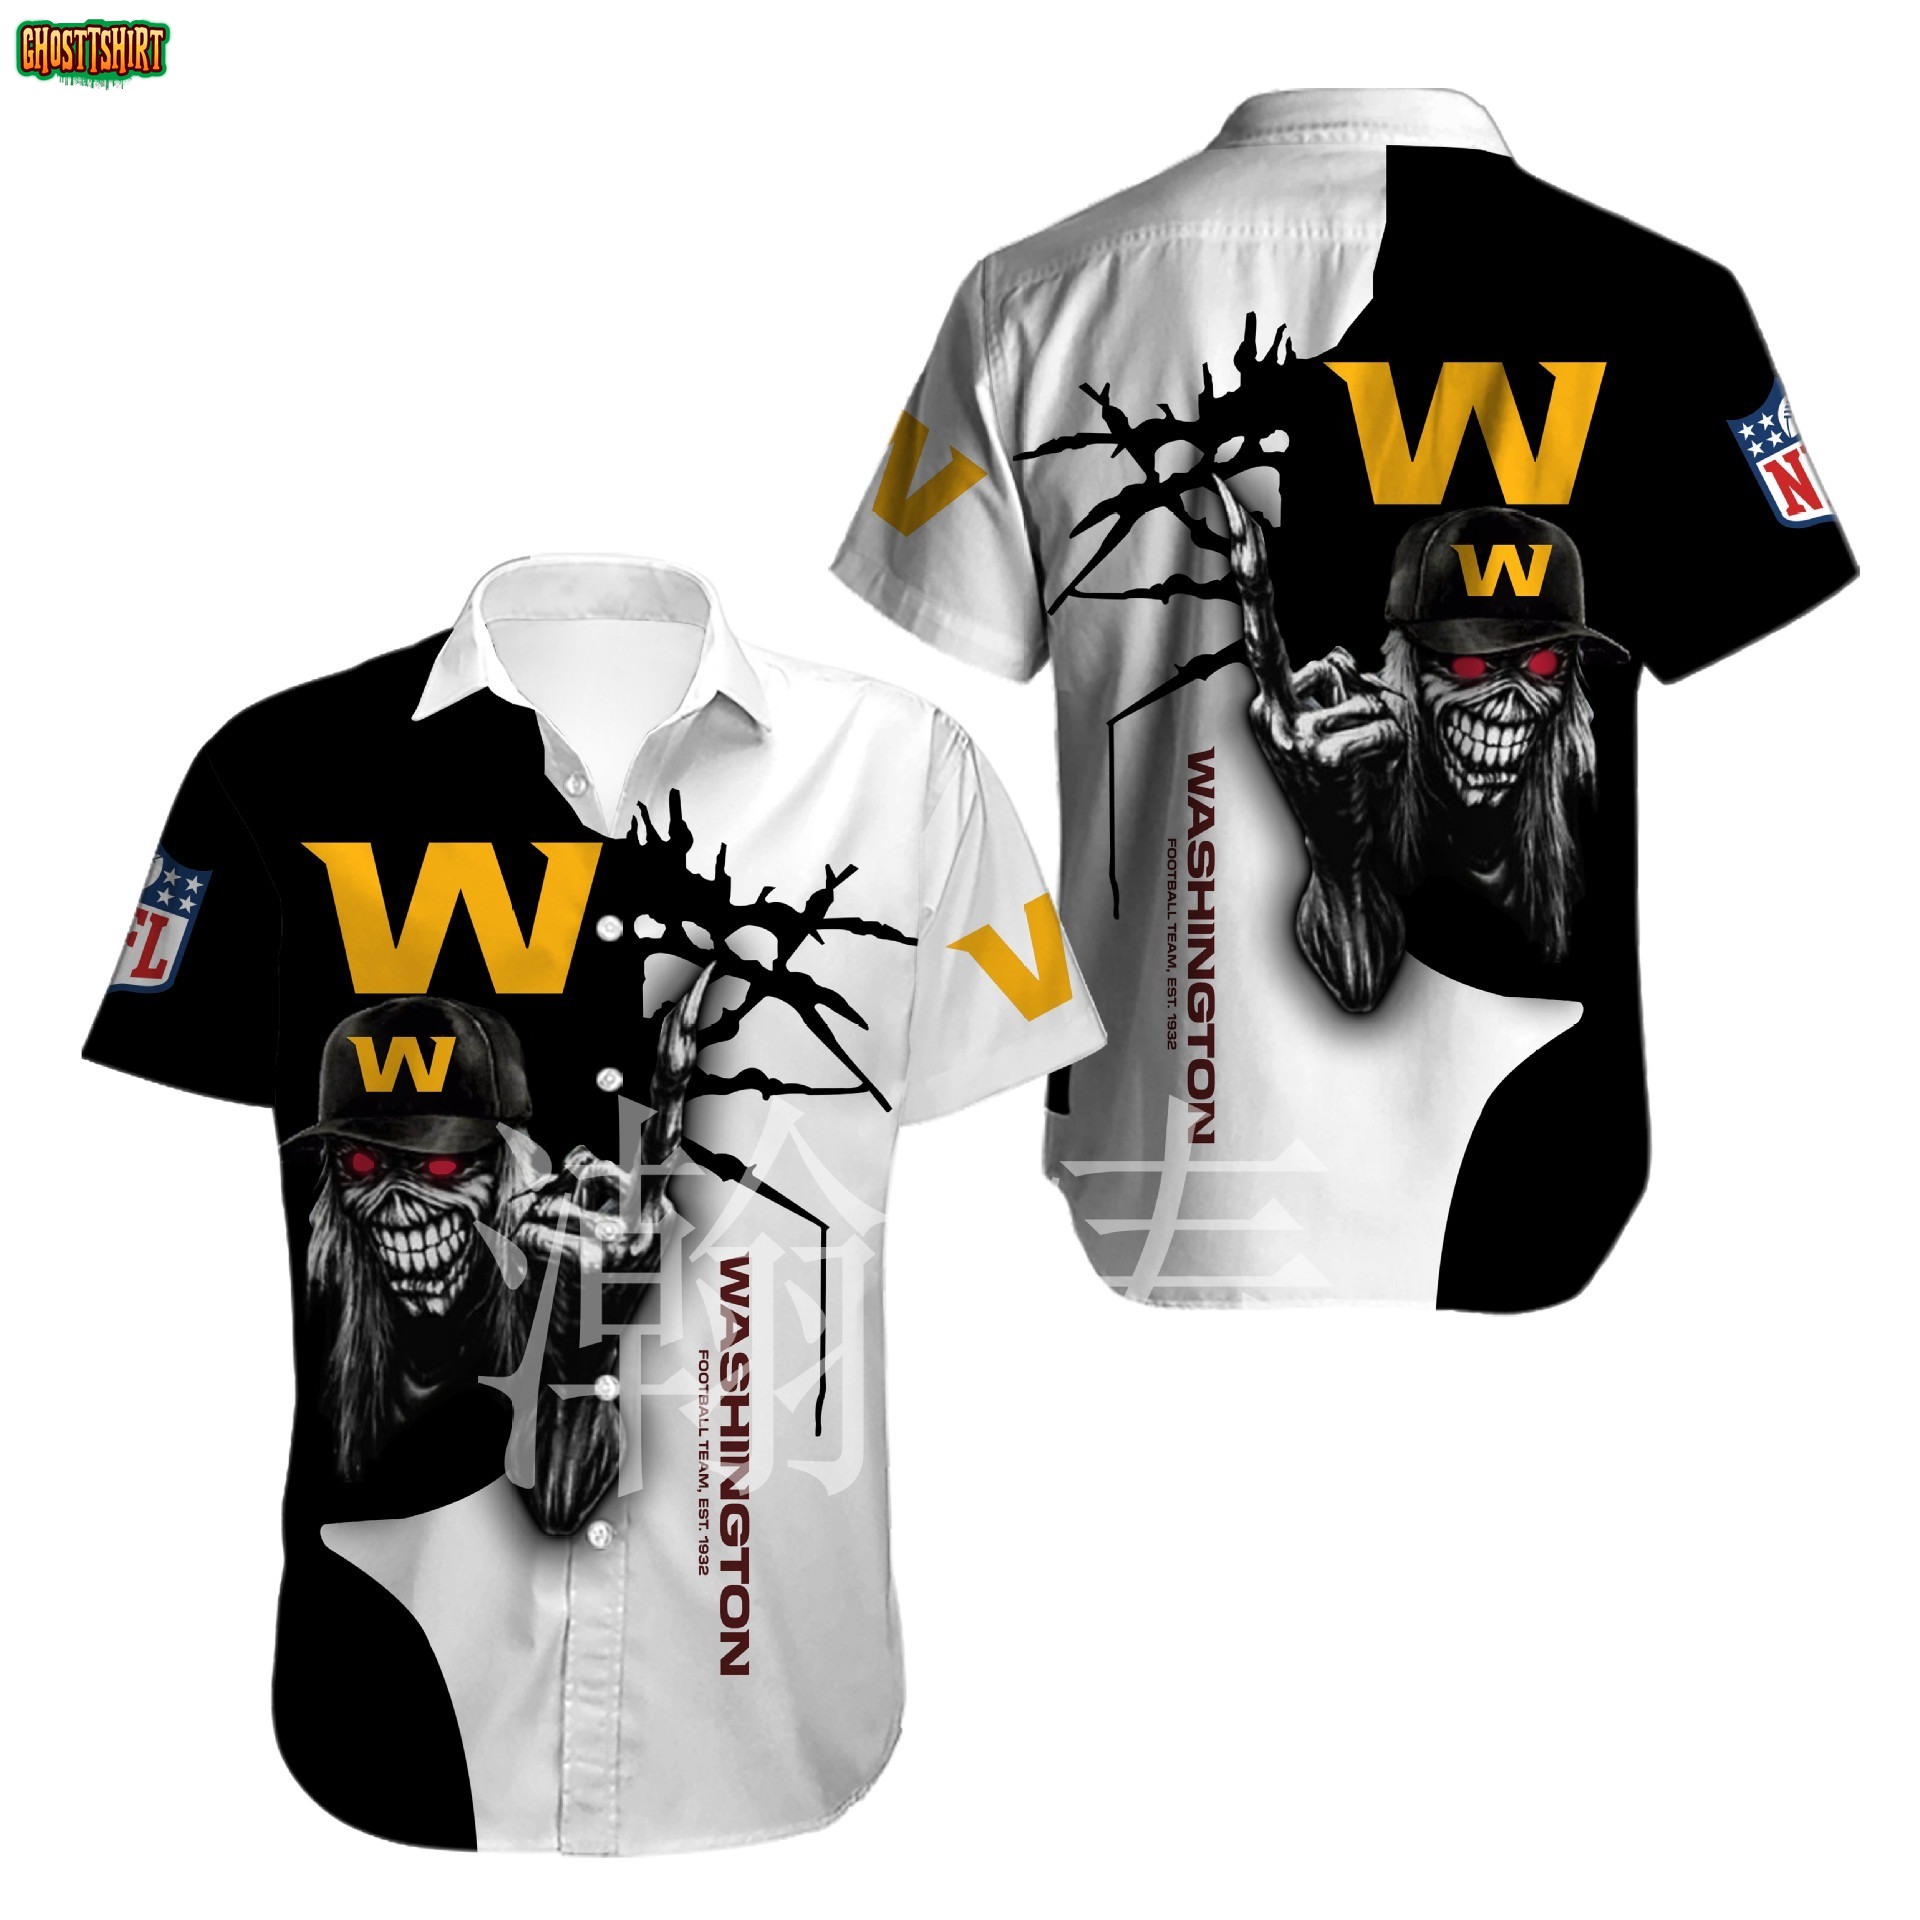 Washington Football Team button-up shirt Iron Maiden gift for Halloween